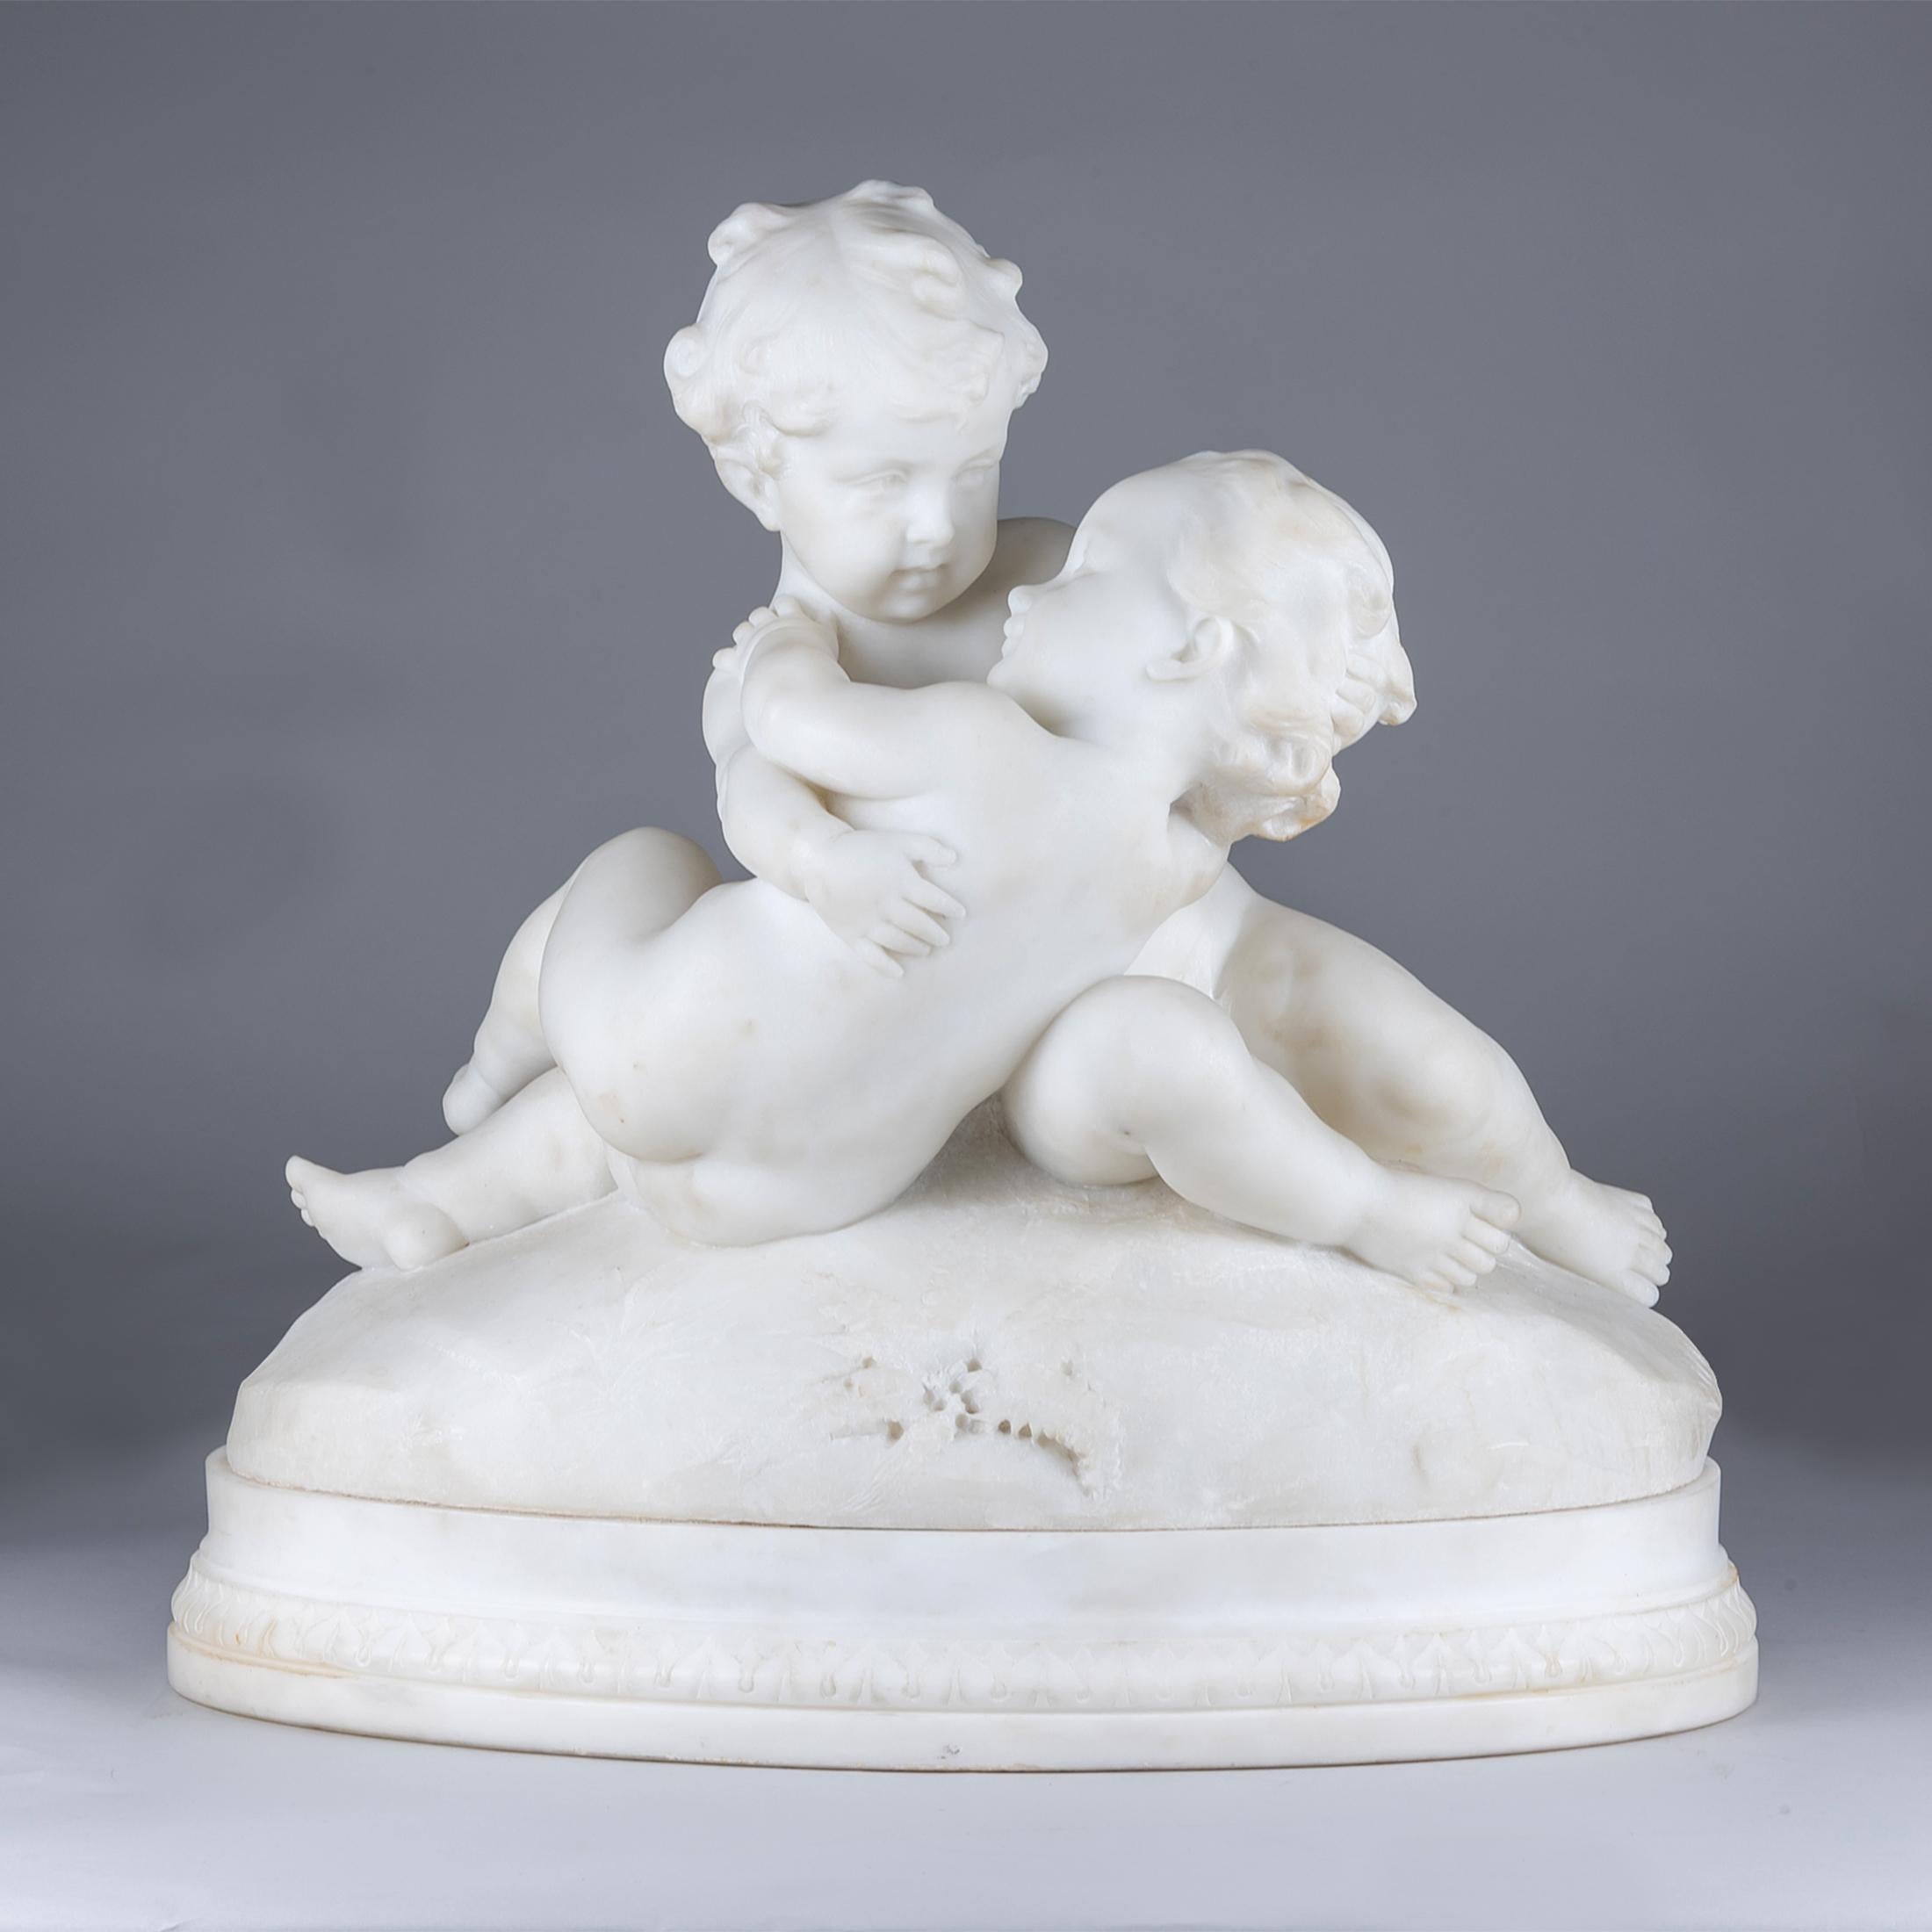 An exquisite Italian Carrara marble sculpture of two Cherubs embracing tenderly by Puji.

Artist: Puji
Origin: Italian
Date: 19th century
Size: 20 in x 20 in.